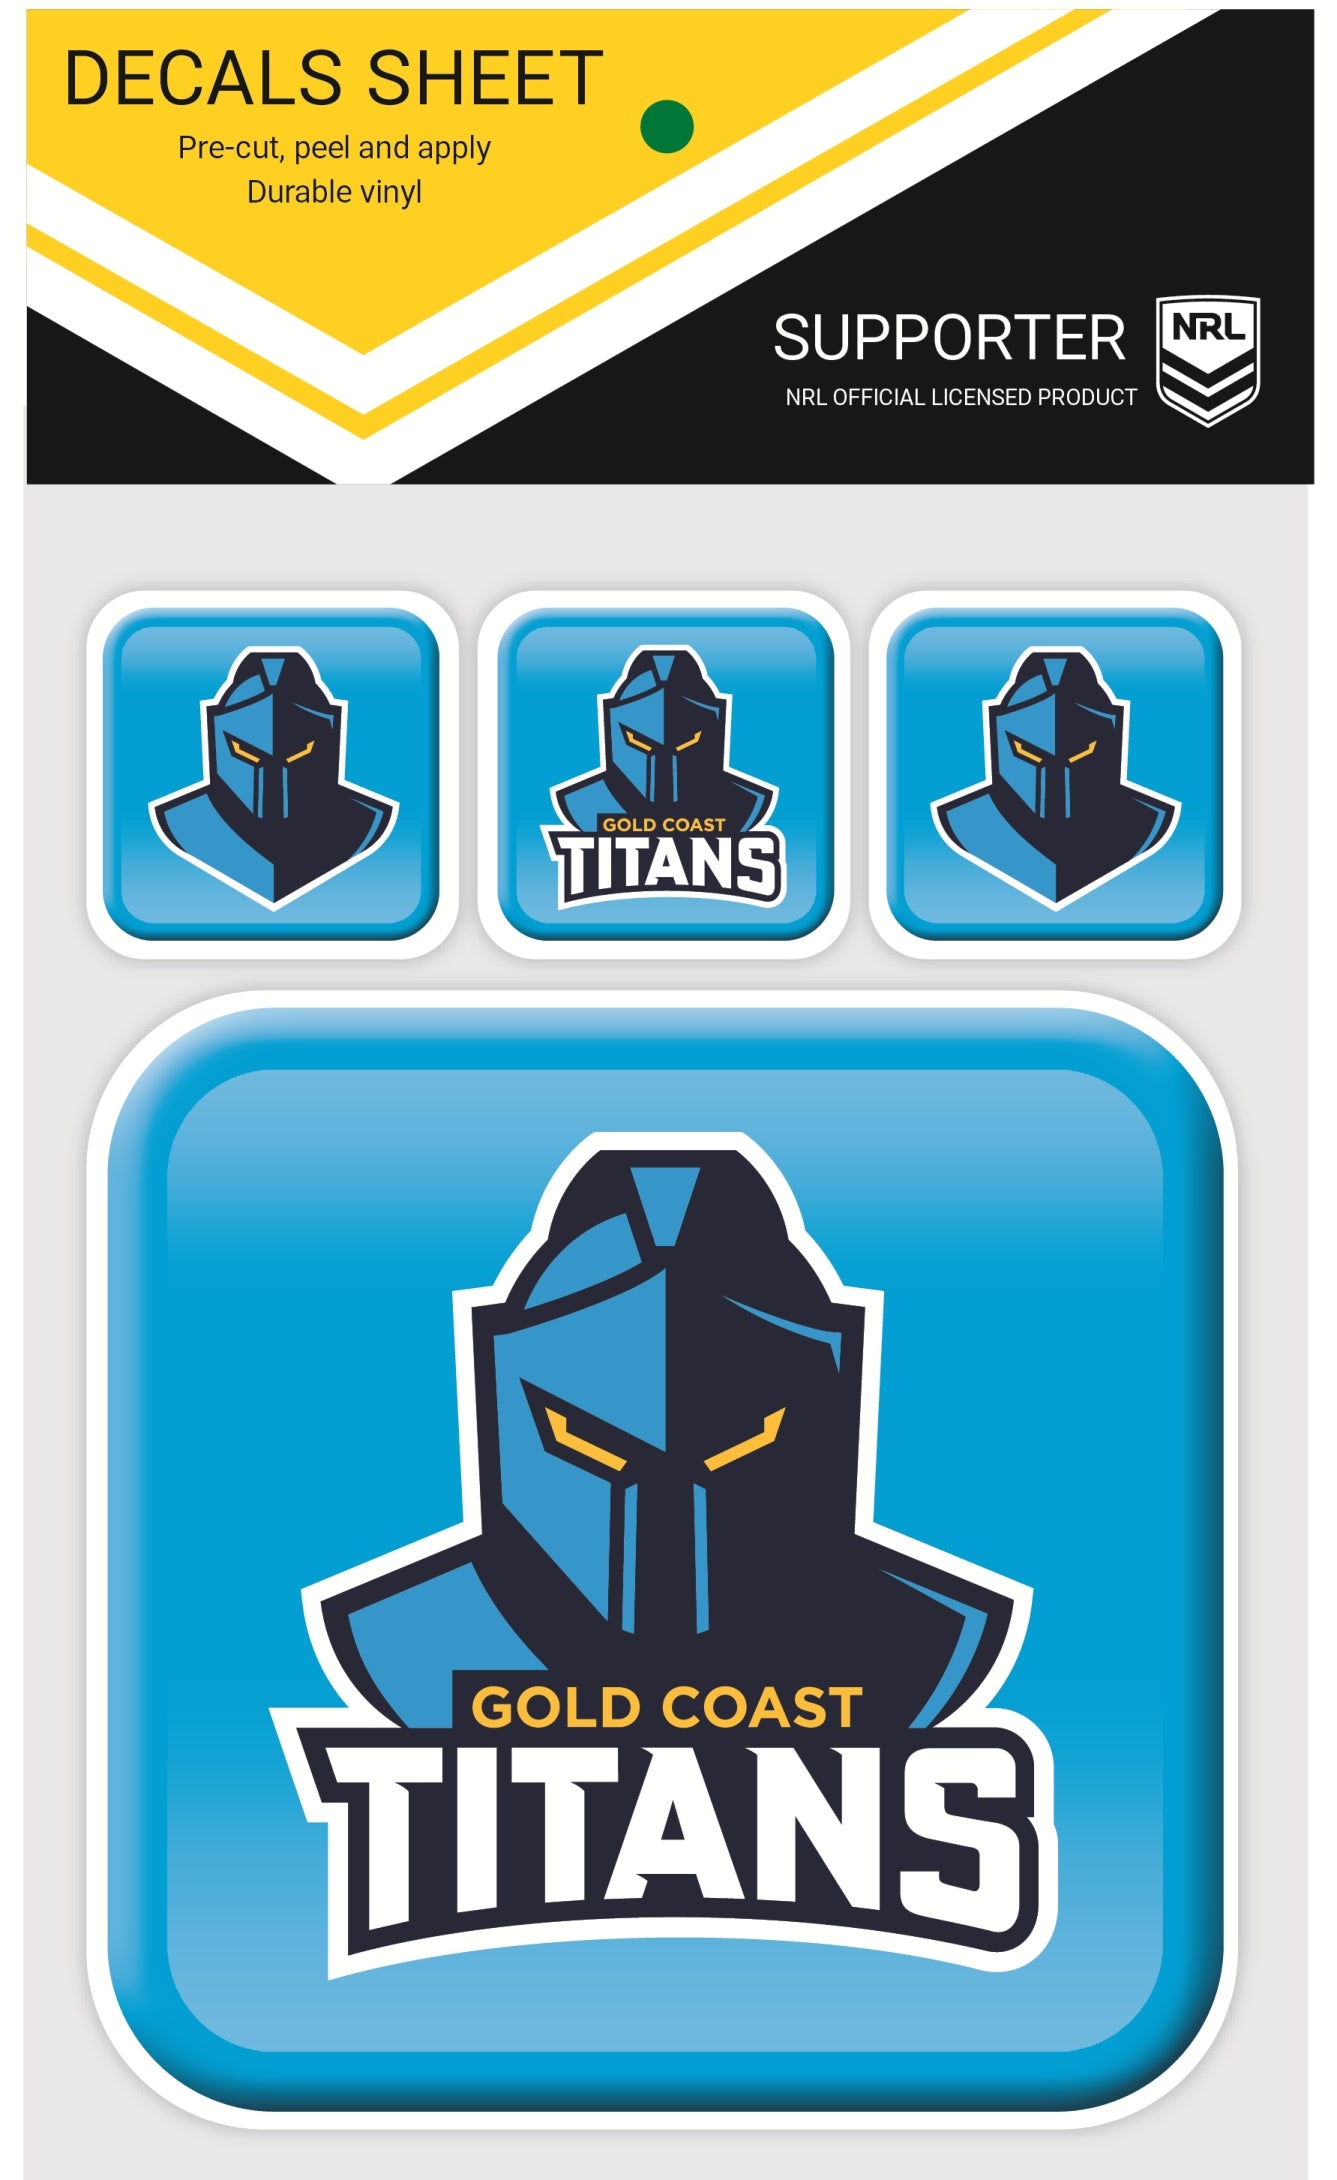 Titans App Icon Decals Sheet